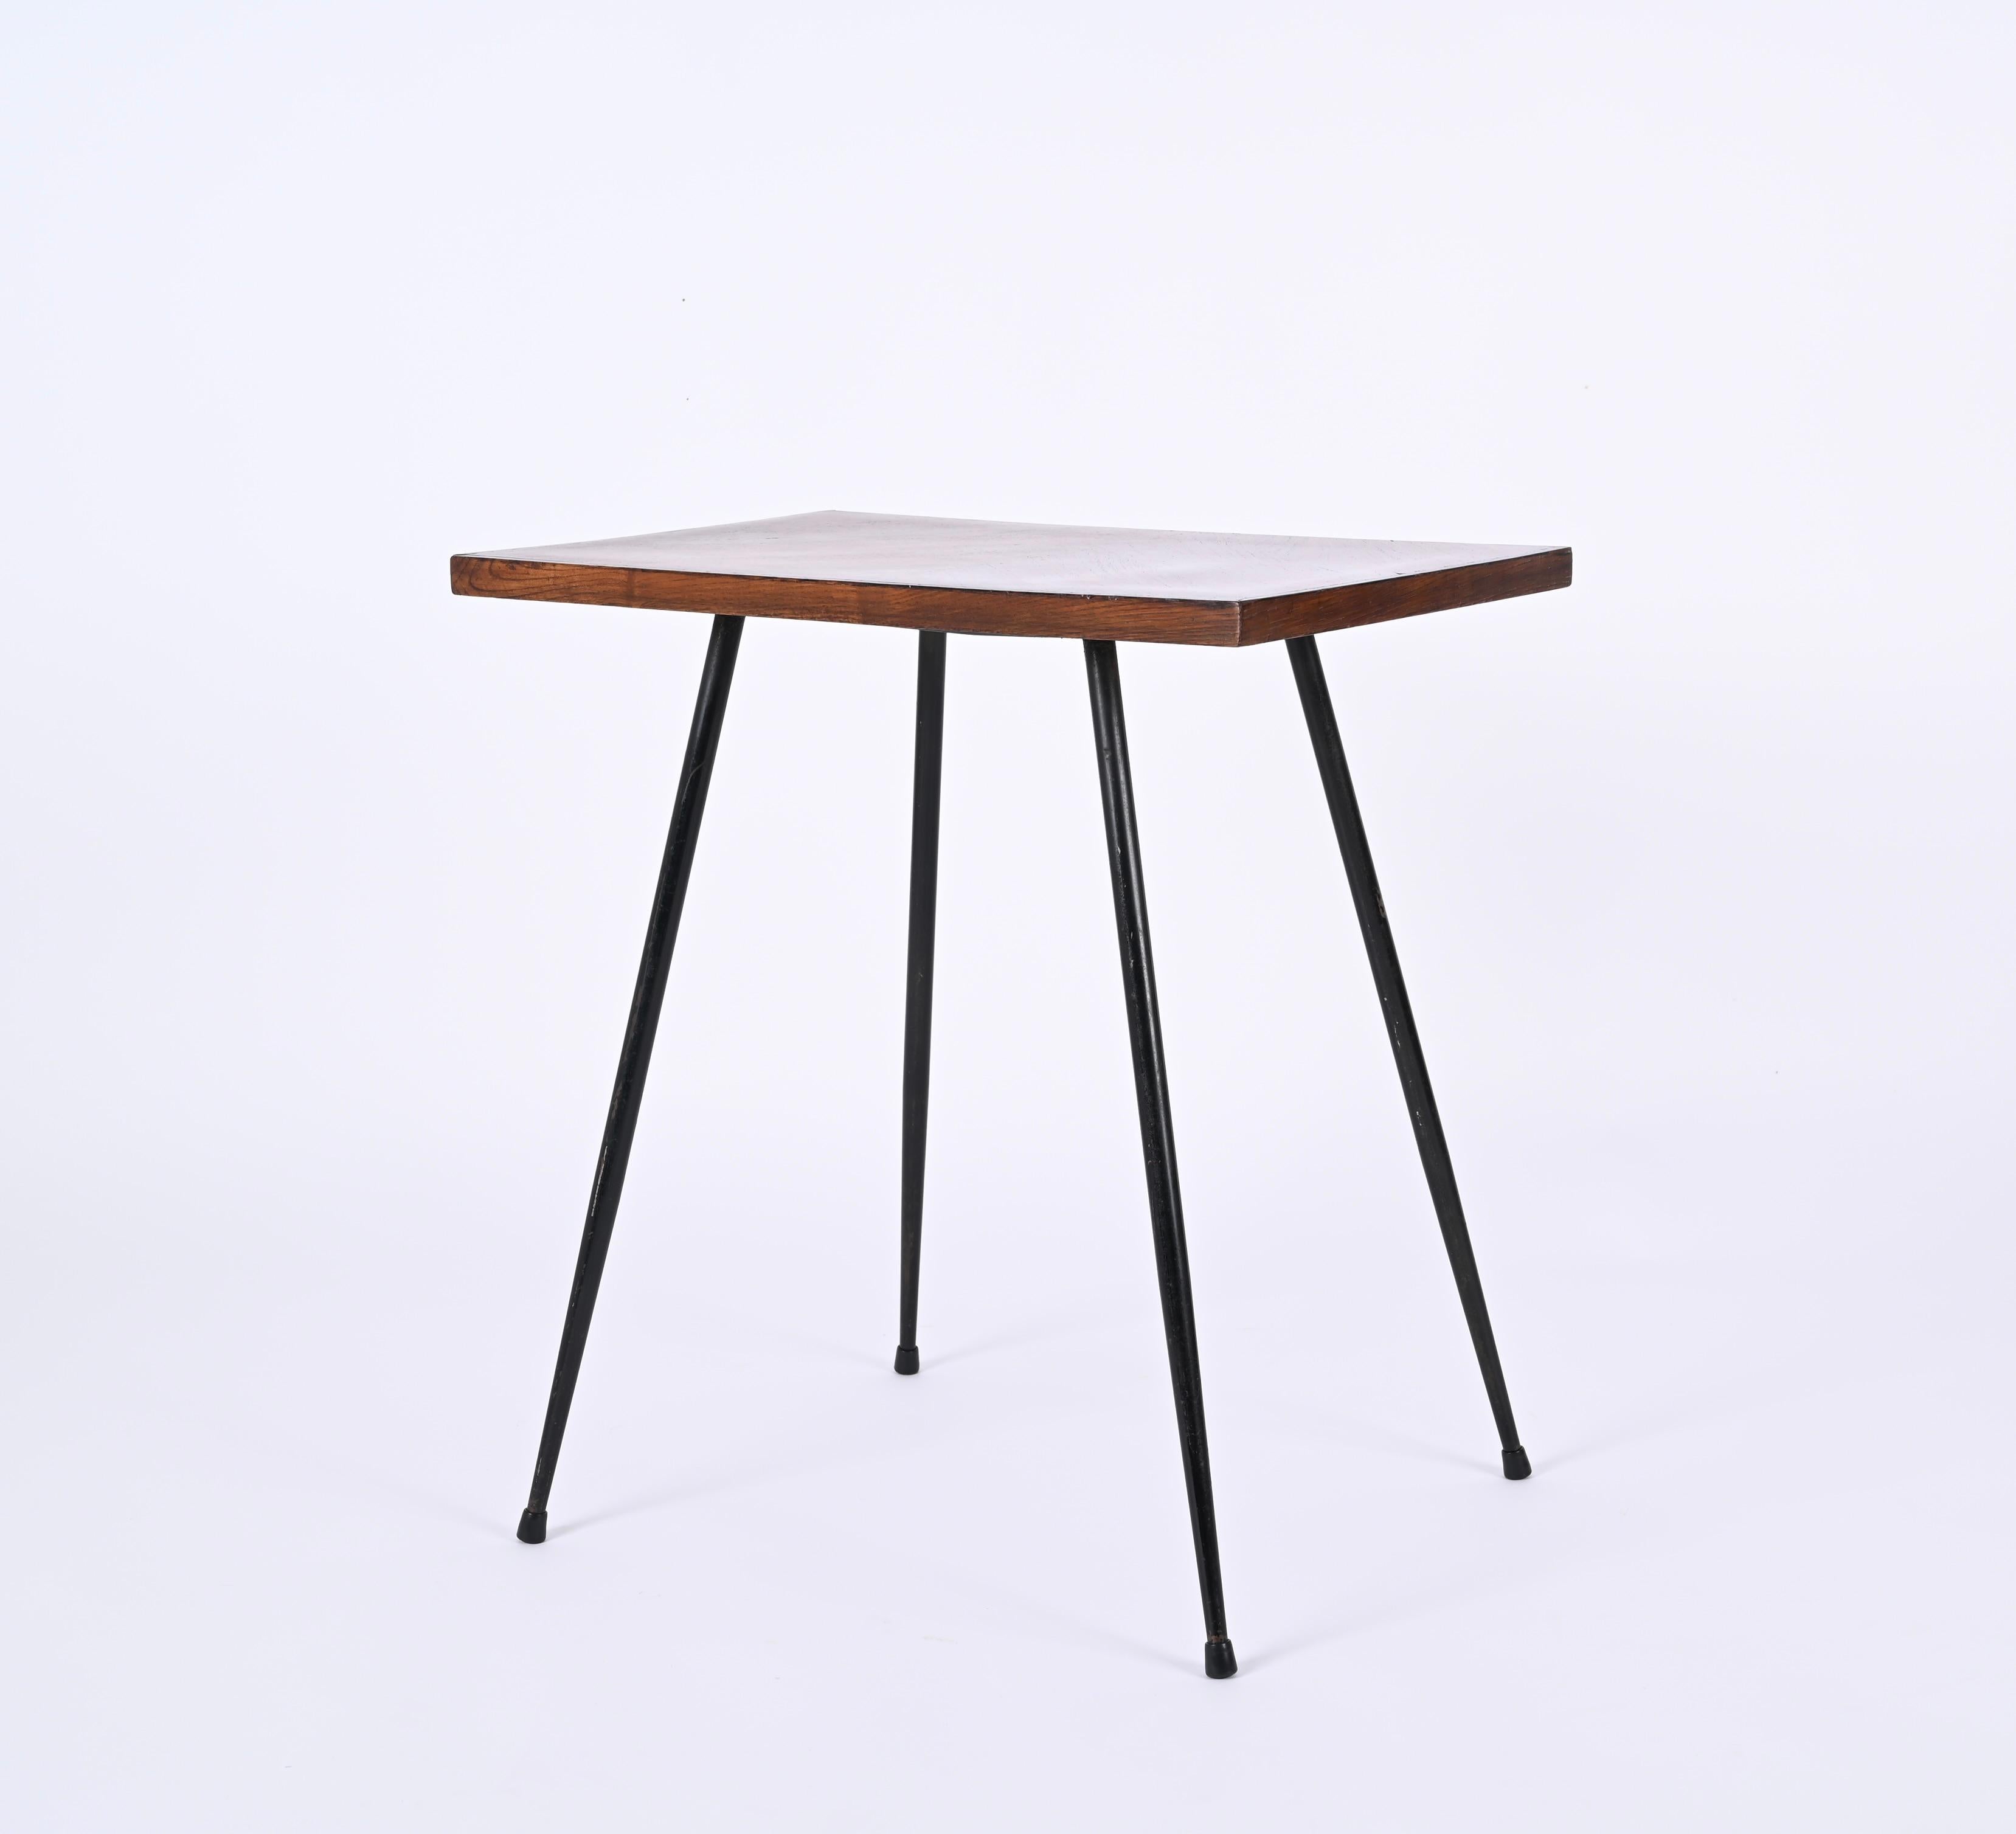 Italian Midcentury Rectangular Side Table in Teak Wood and Enameled Metal, 1950s For Sale 6